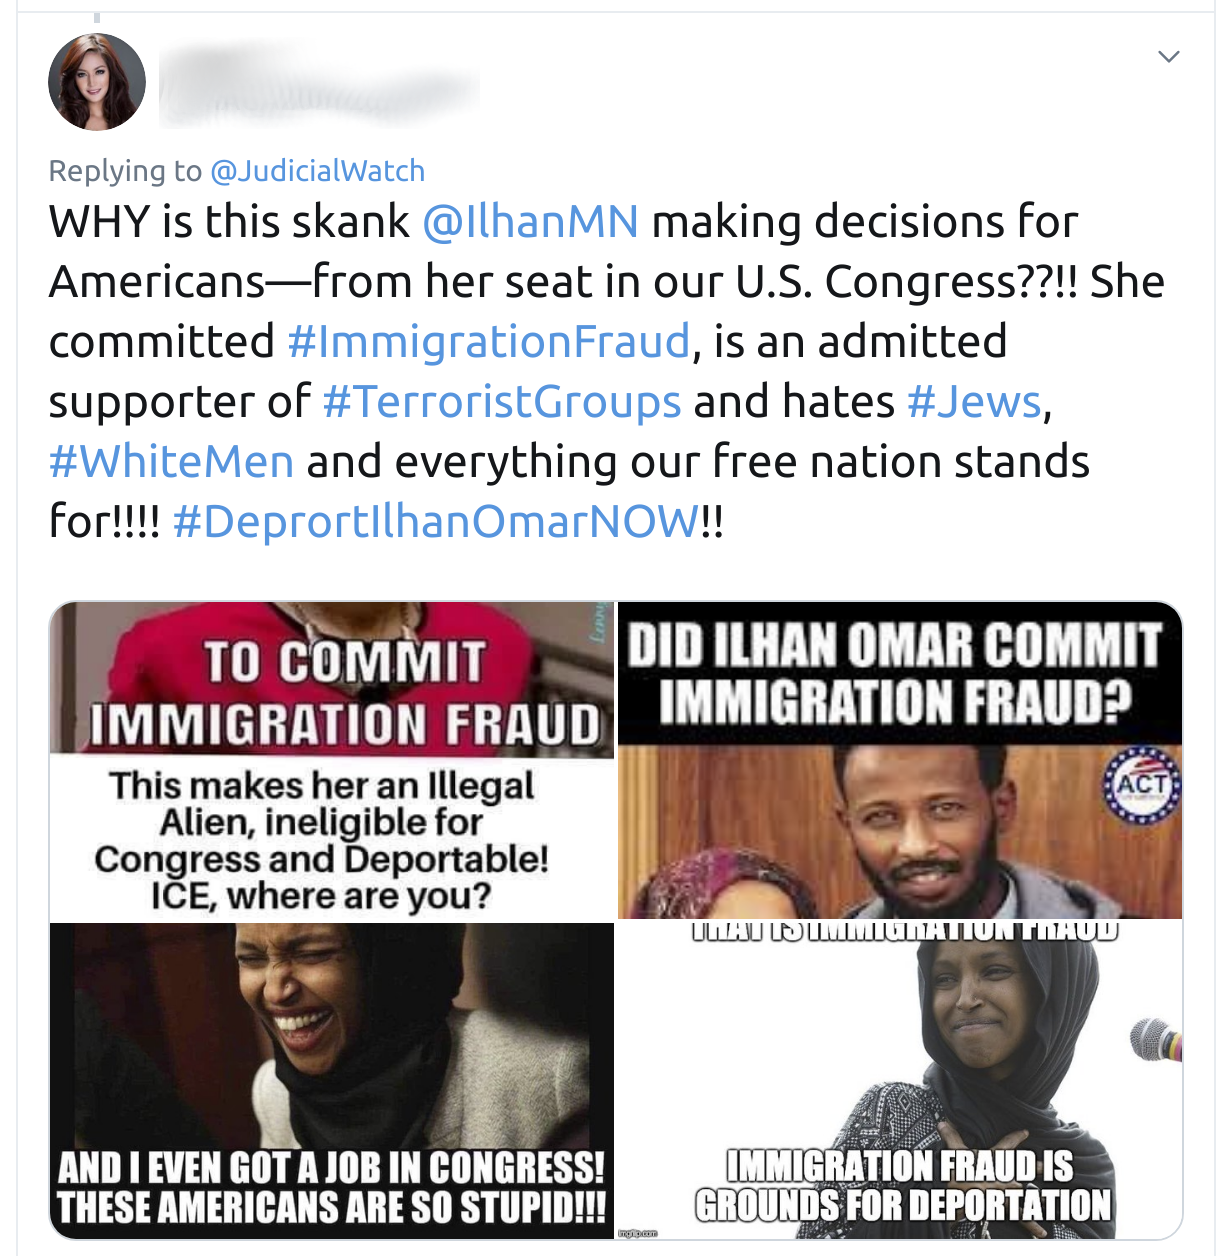 Post attacking Ilhan Omar